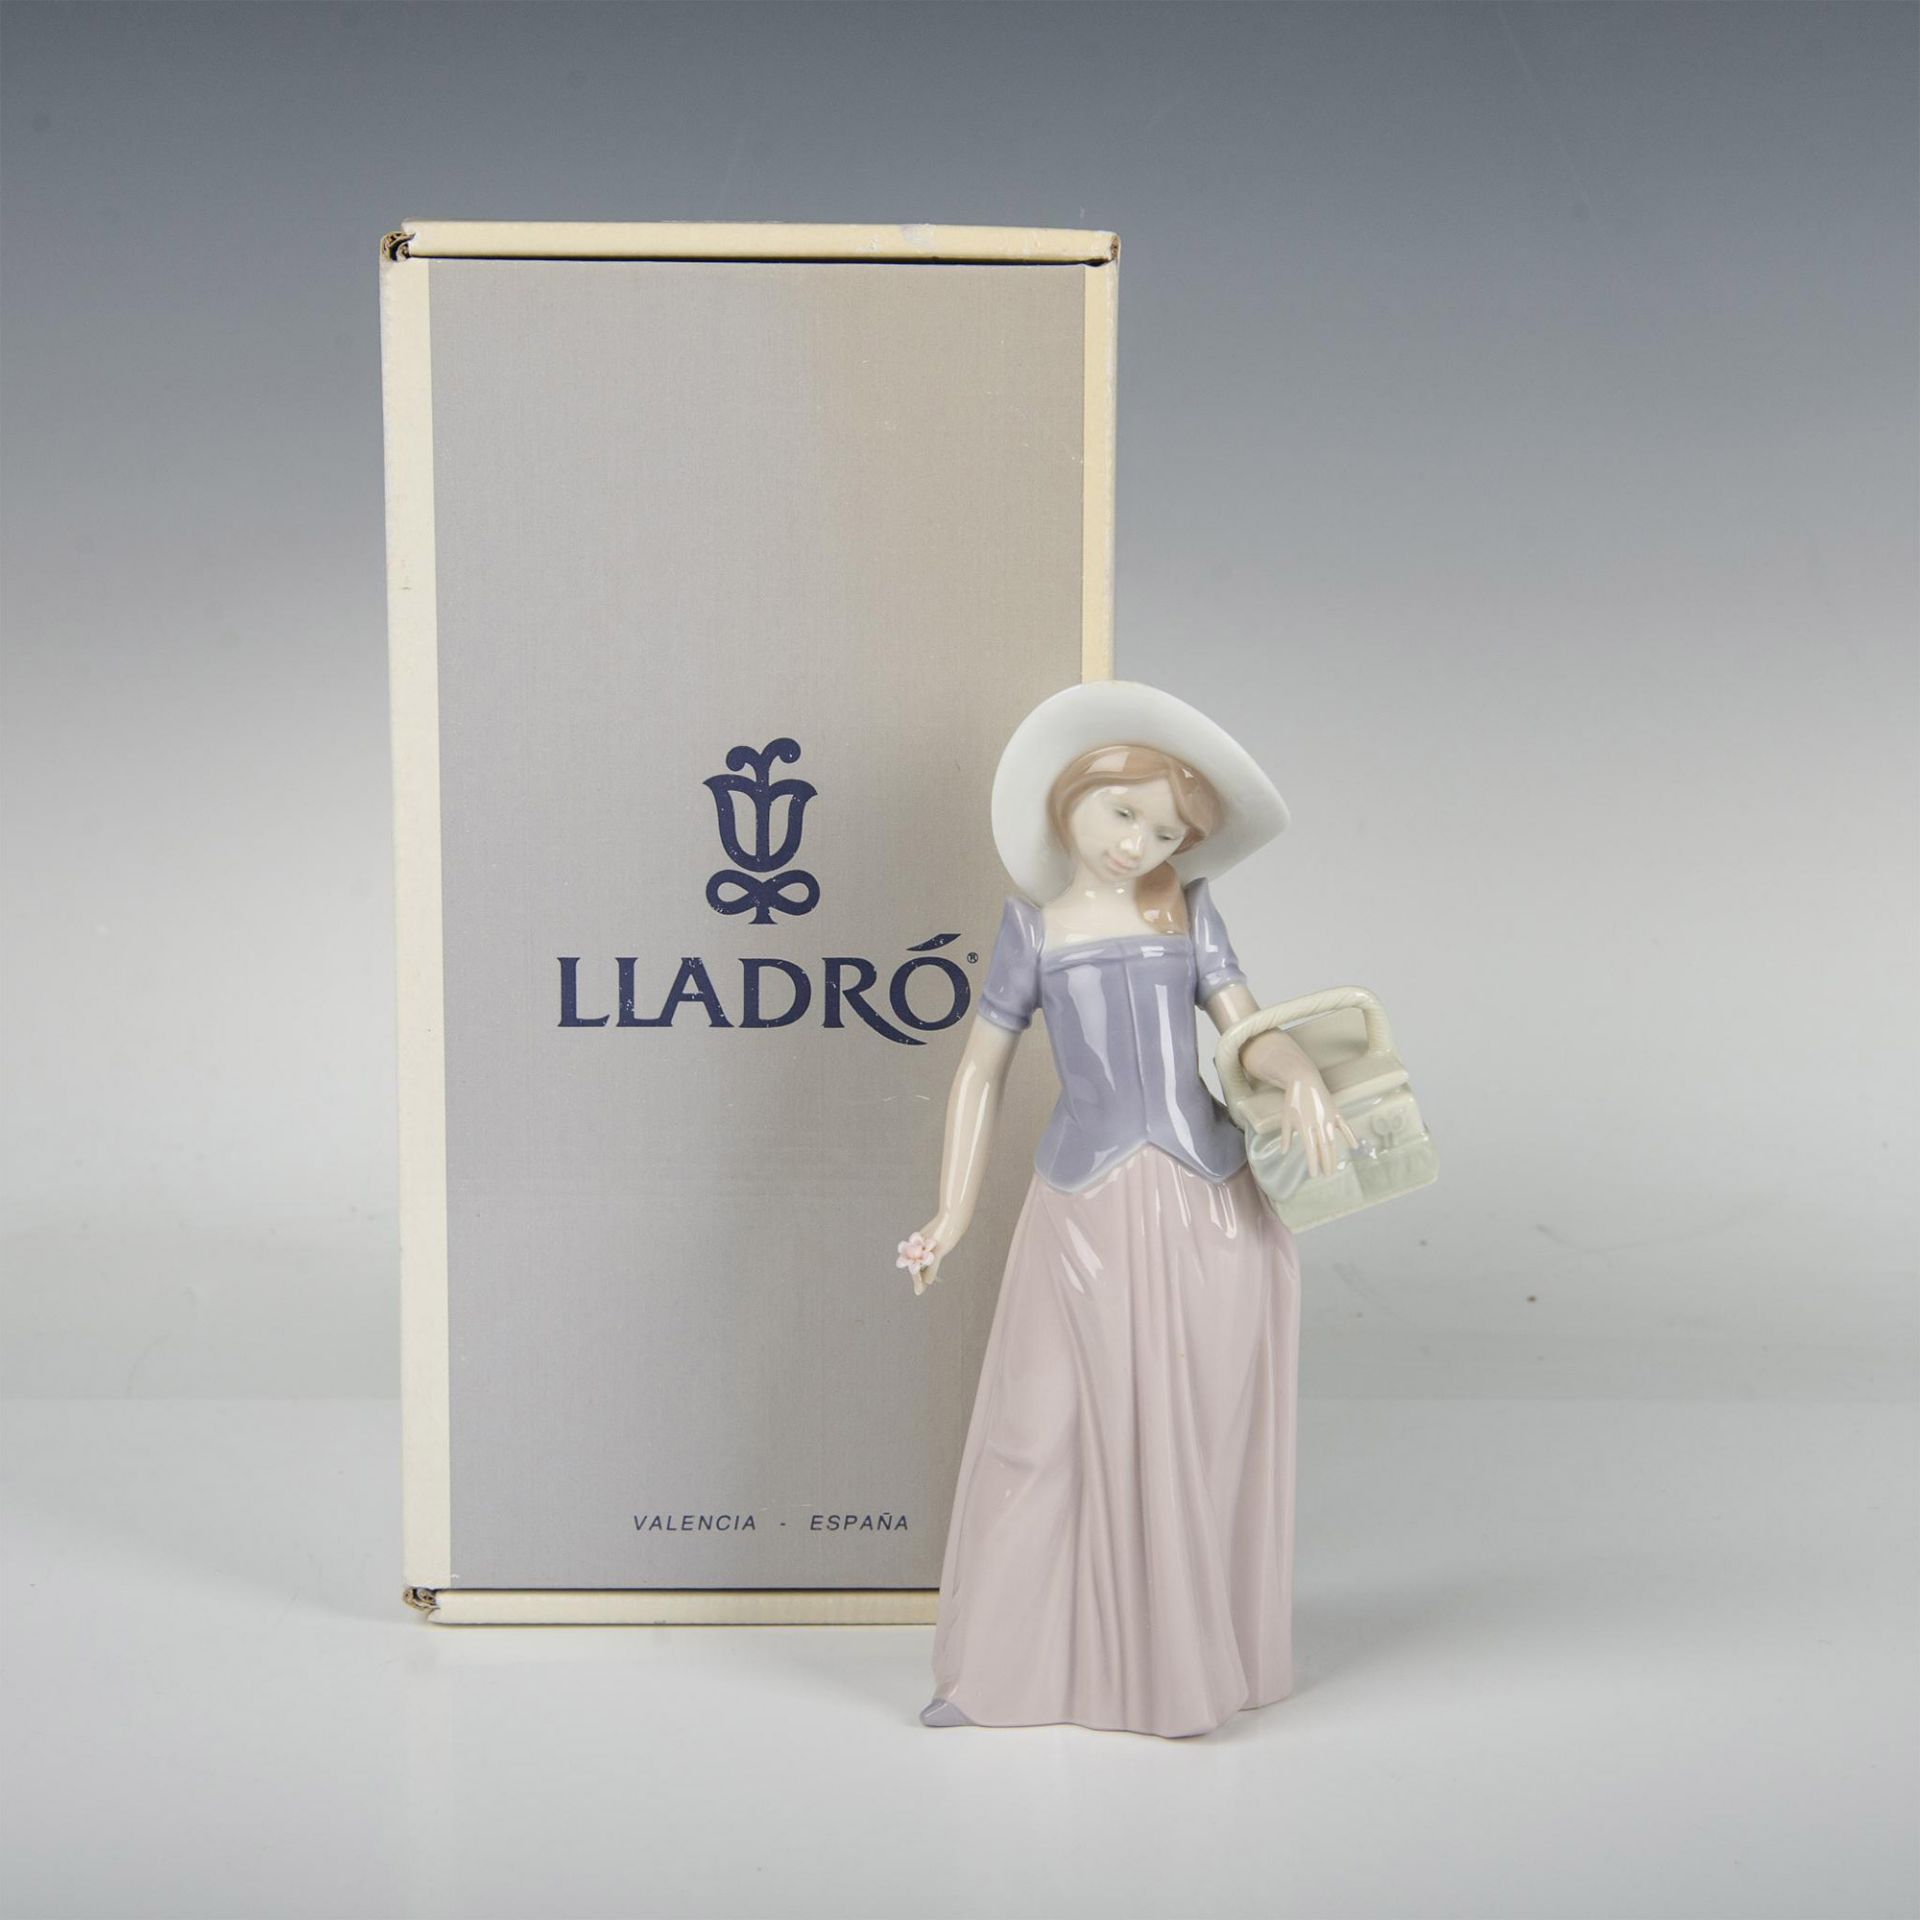 Tailor Made 1006489 - Lladro Porcelain Figurine - Image 4 of 4